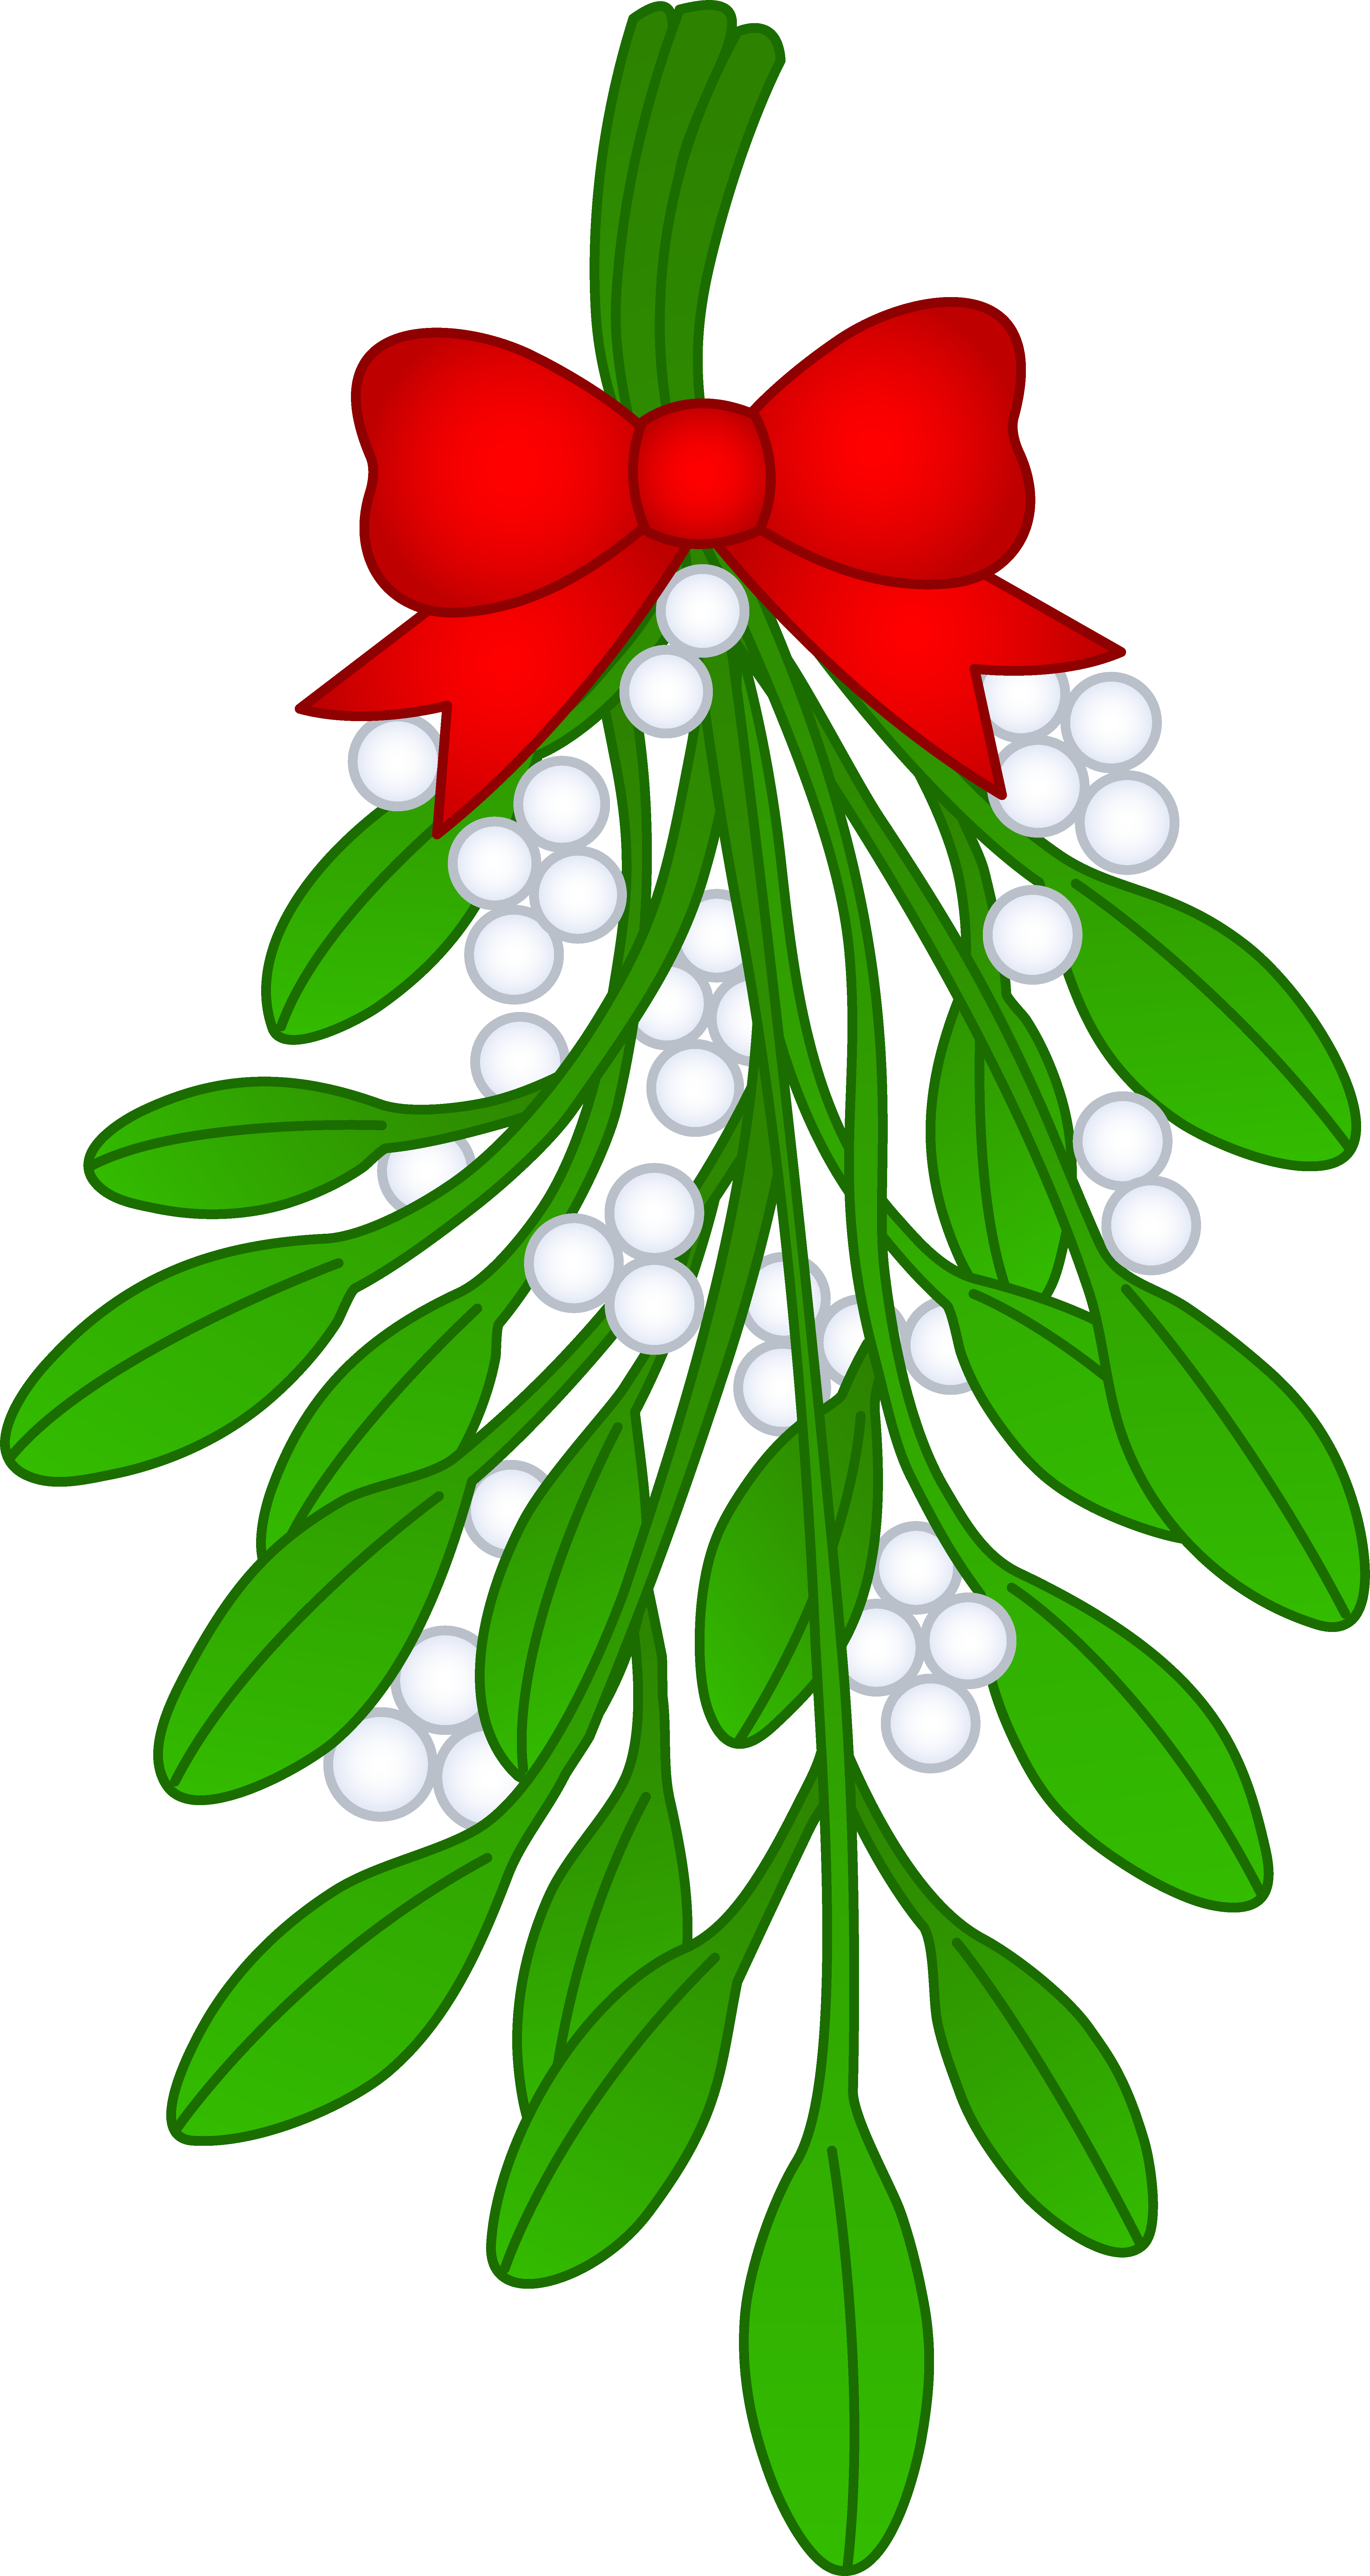 Christmas mistletoe clipart hanging